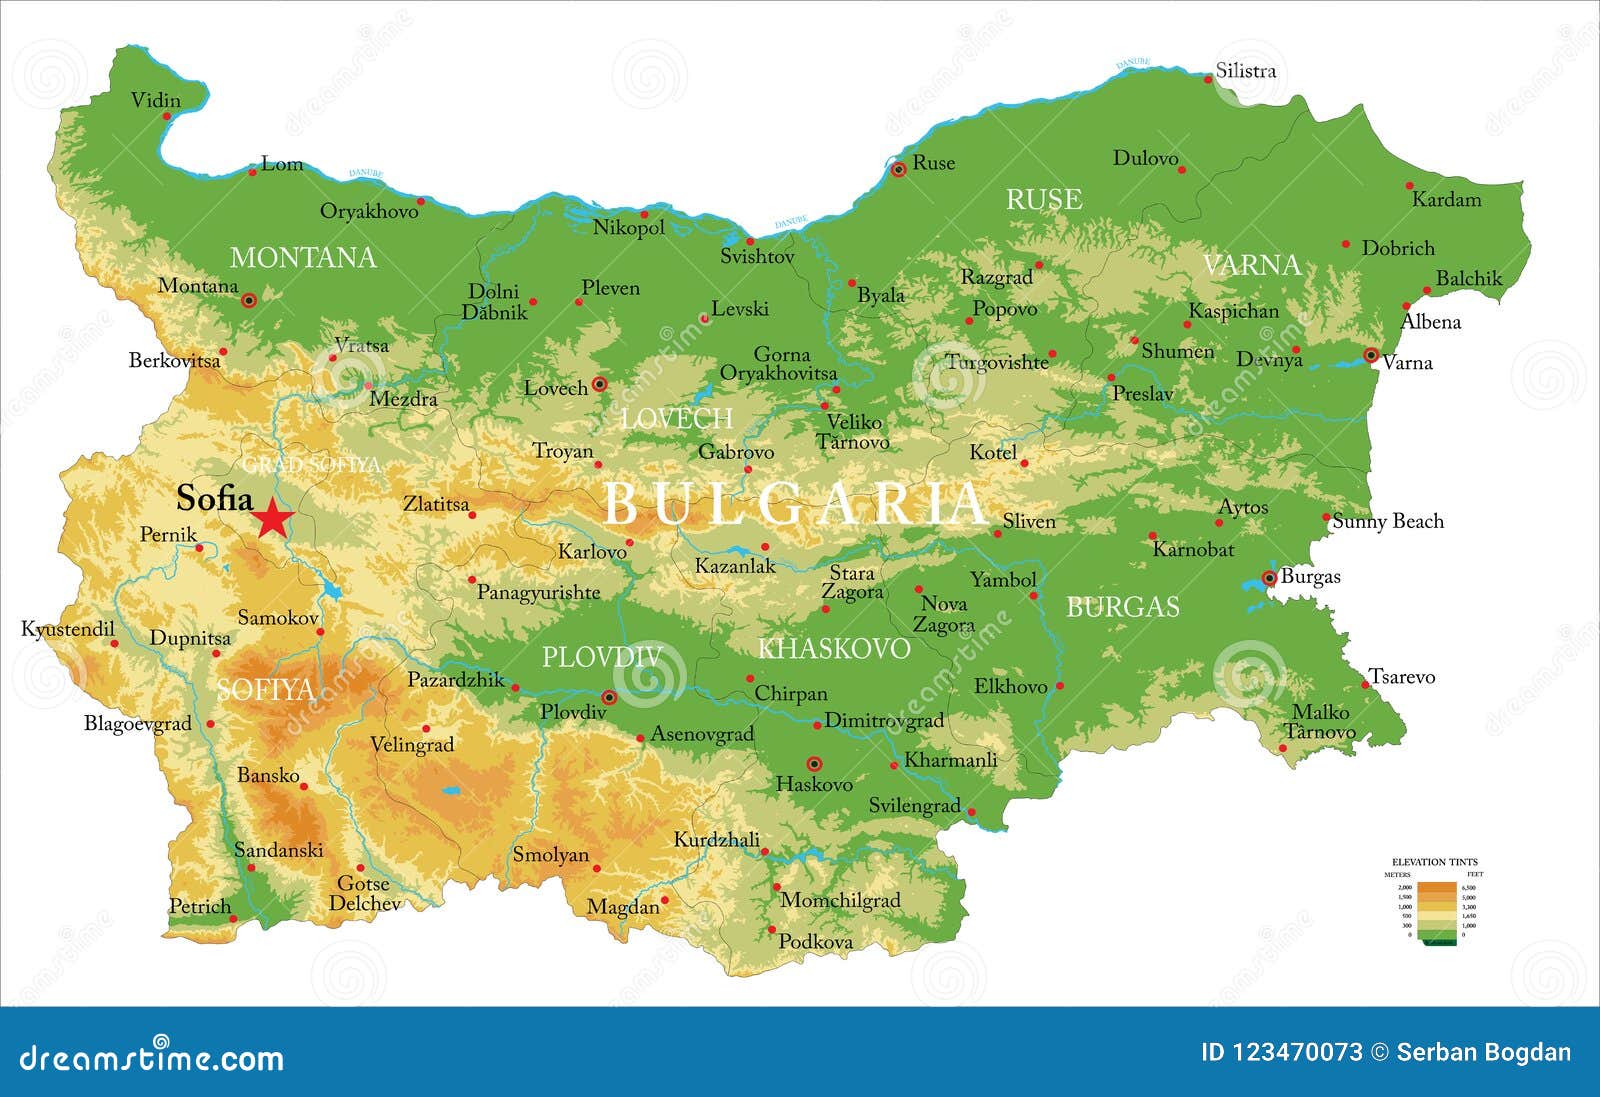 bulgaria physical map